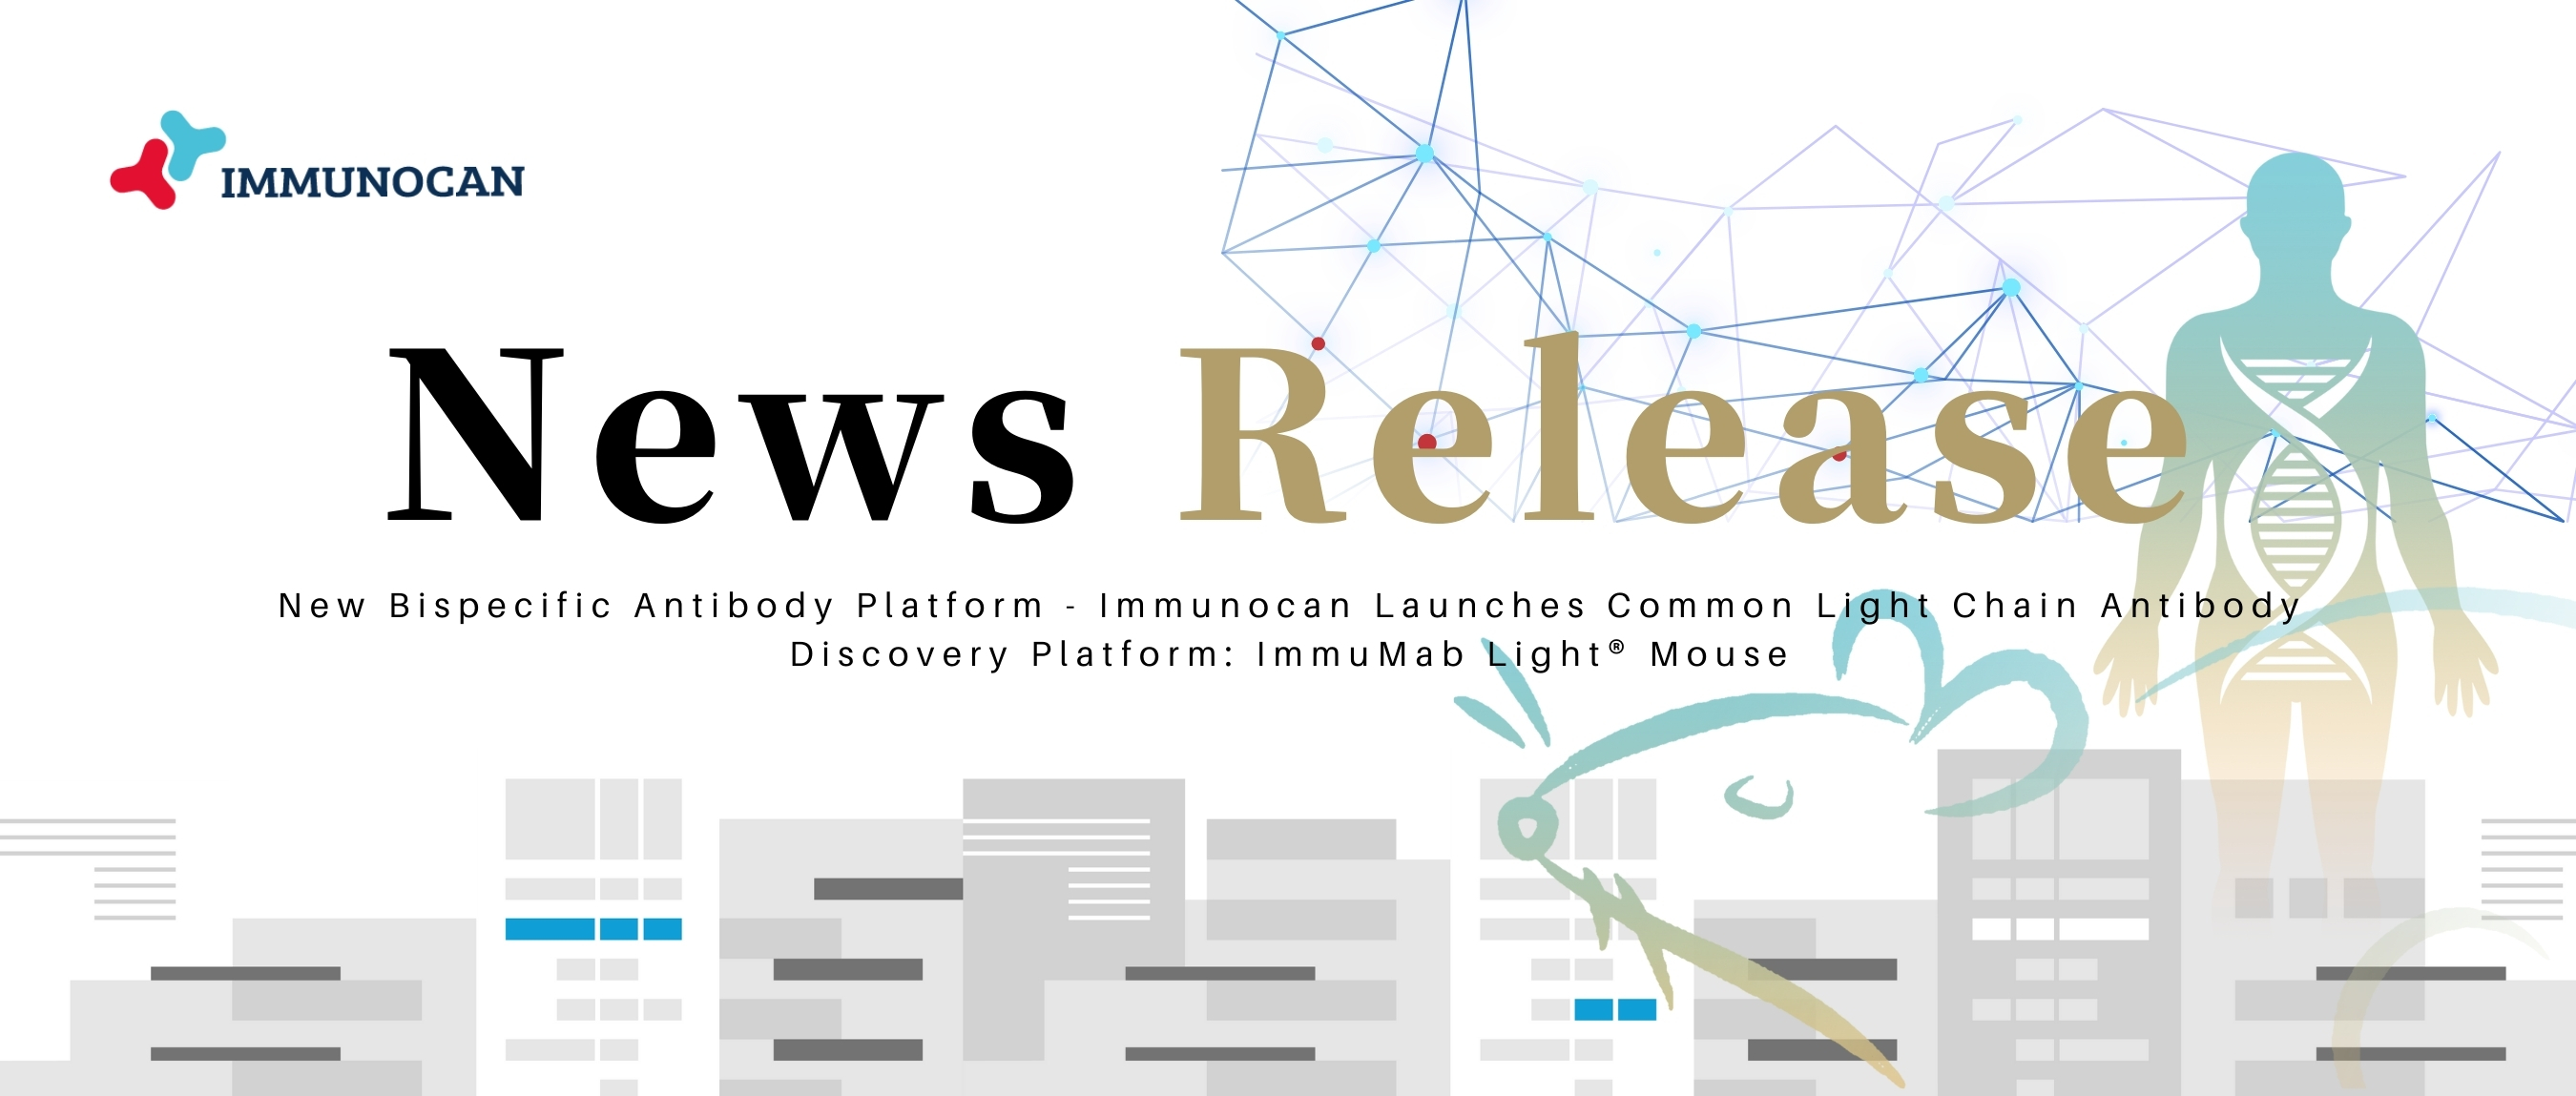 New Bispecific Antibody Platform - Immunocan Launches Common Light Chain Antibody Discovery Platform: ImmuMab Light® Mouse